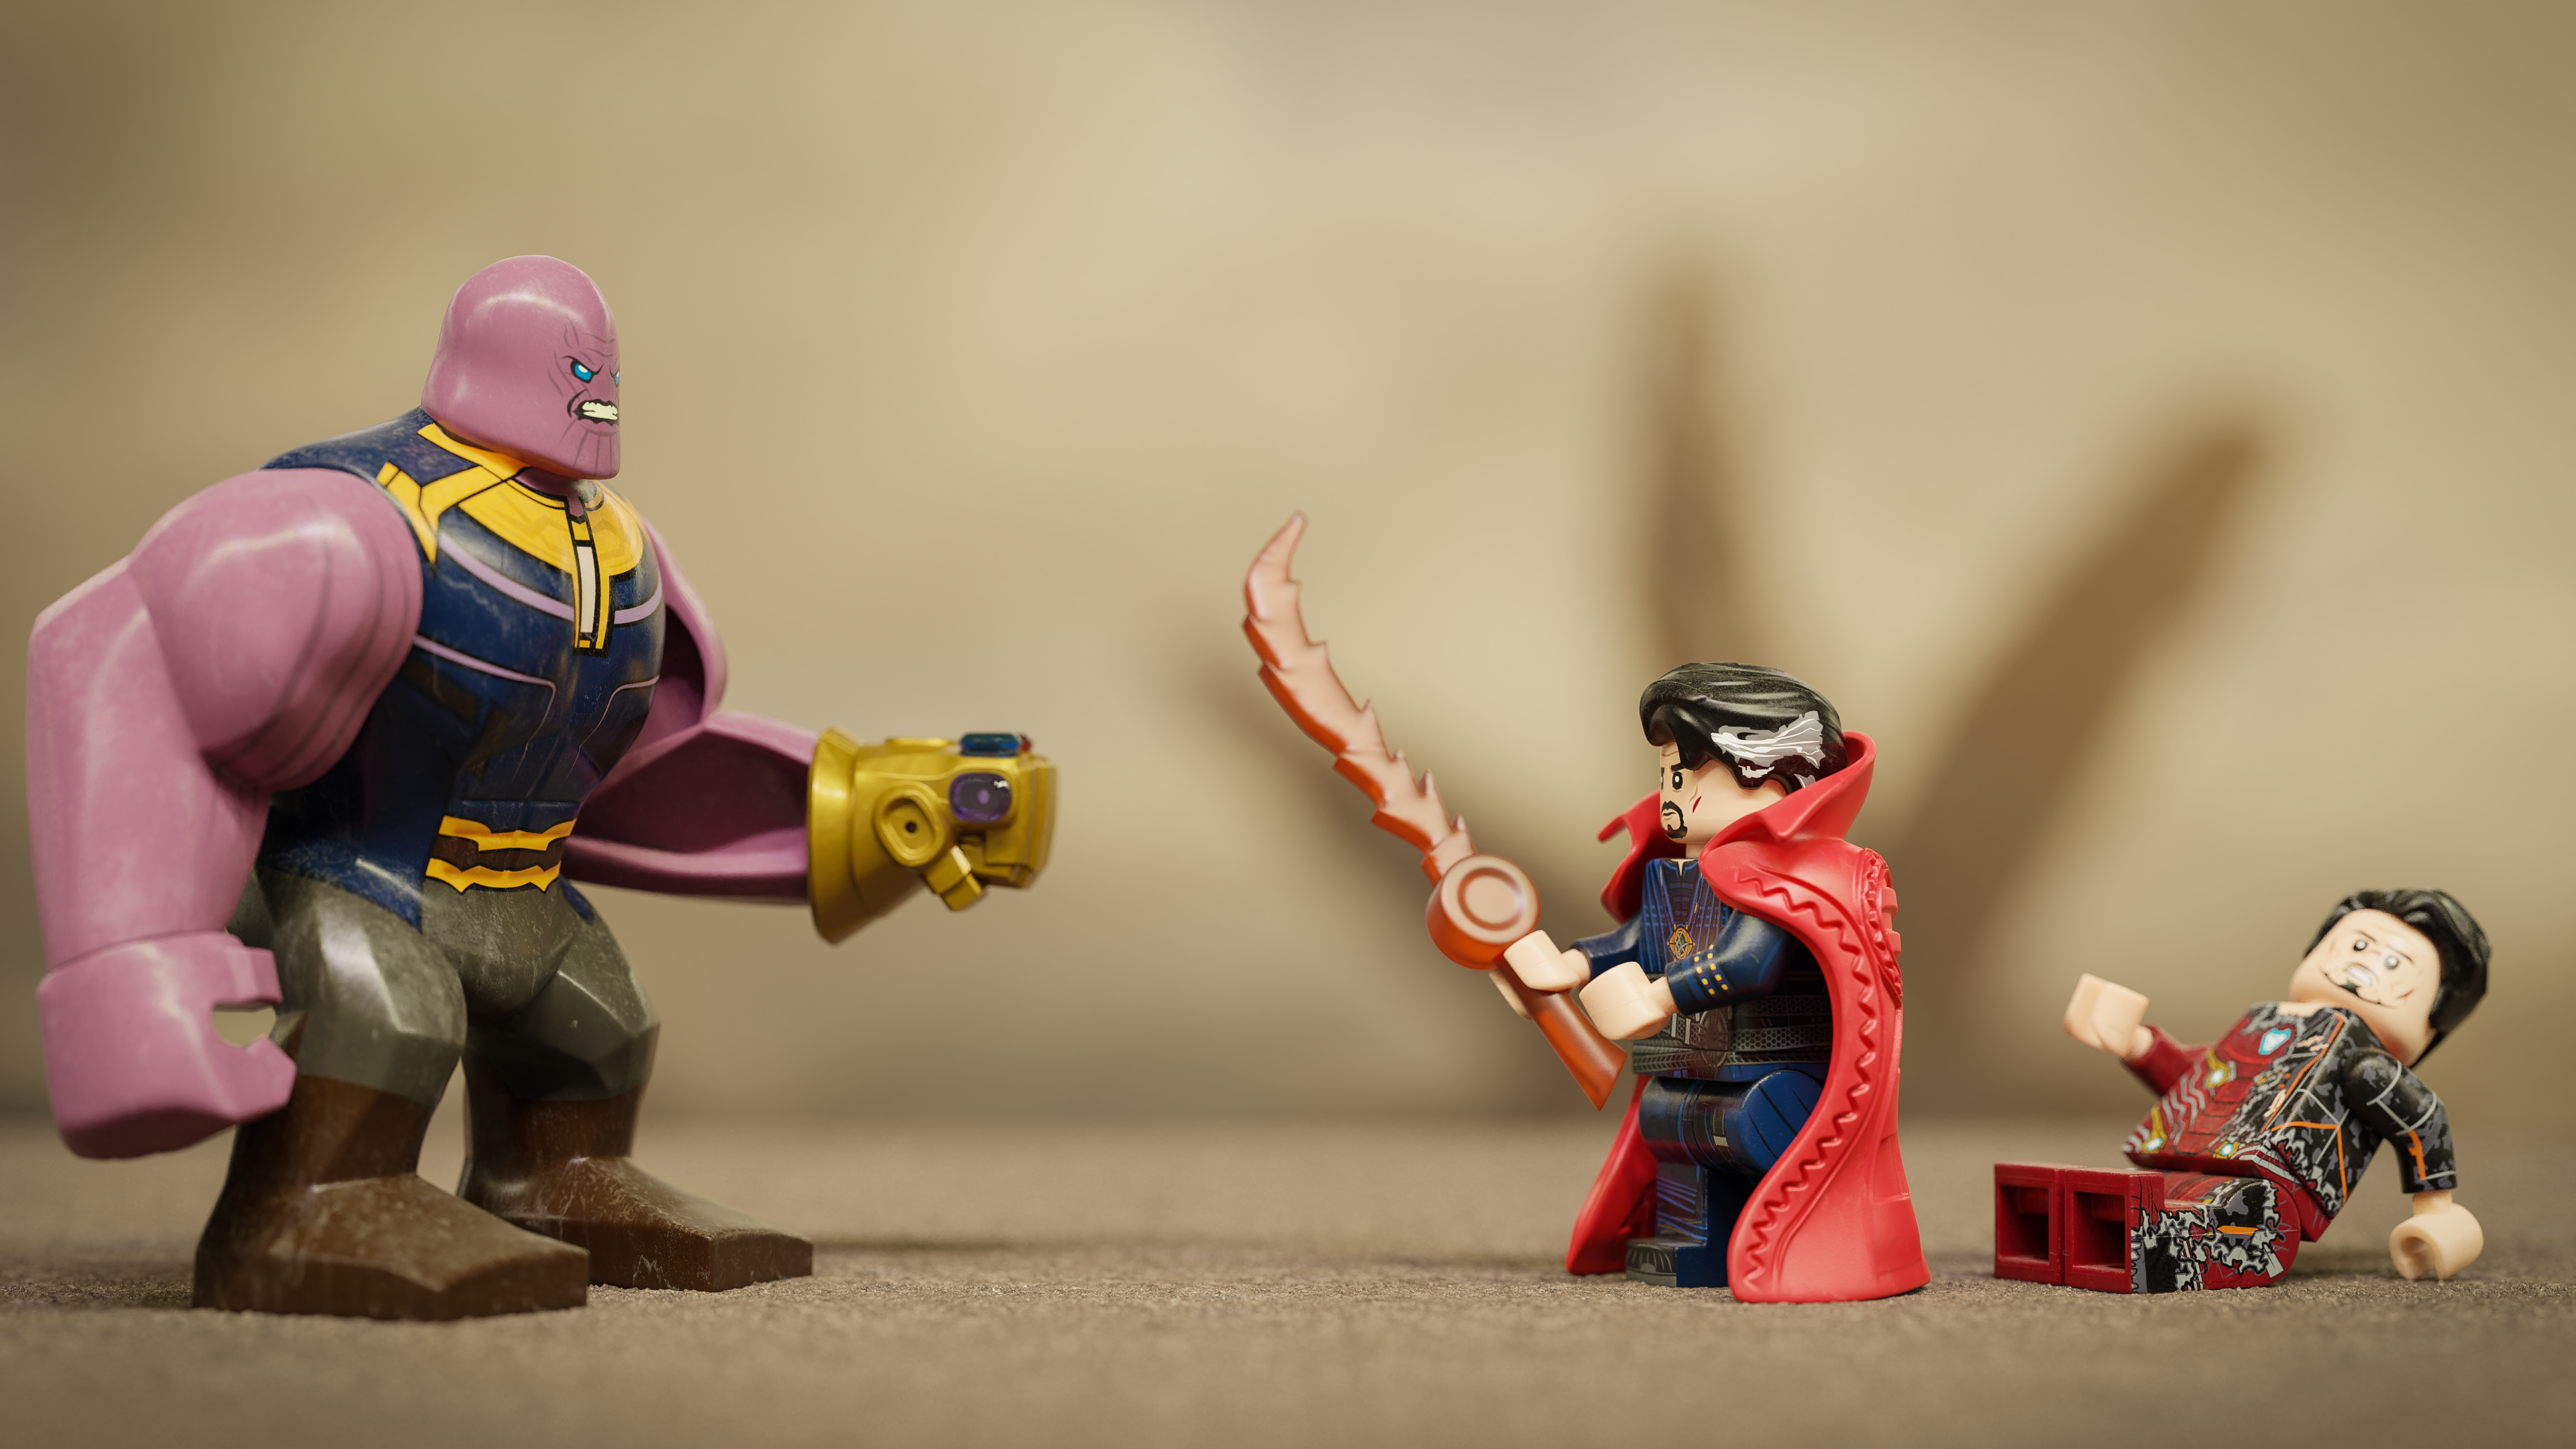 Thanos Doctor Strange Iron Man Lego Tony Stark Avengers Infinity War 3840x2160